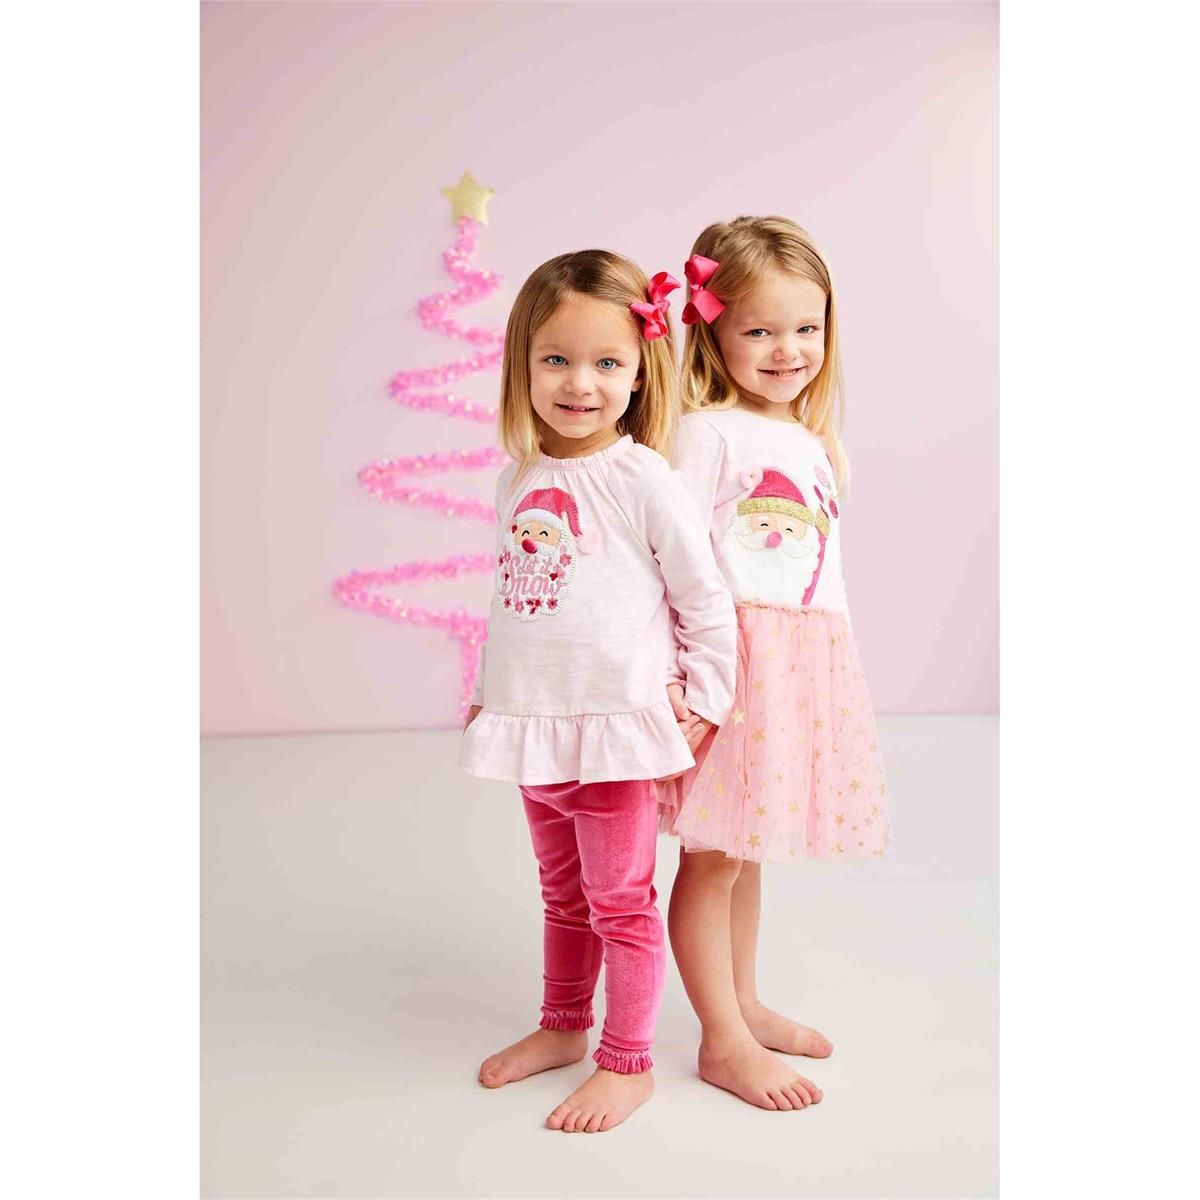 Pink Santa Glitter Toddler Dress - Jayla's Bowtique